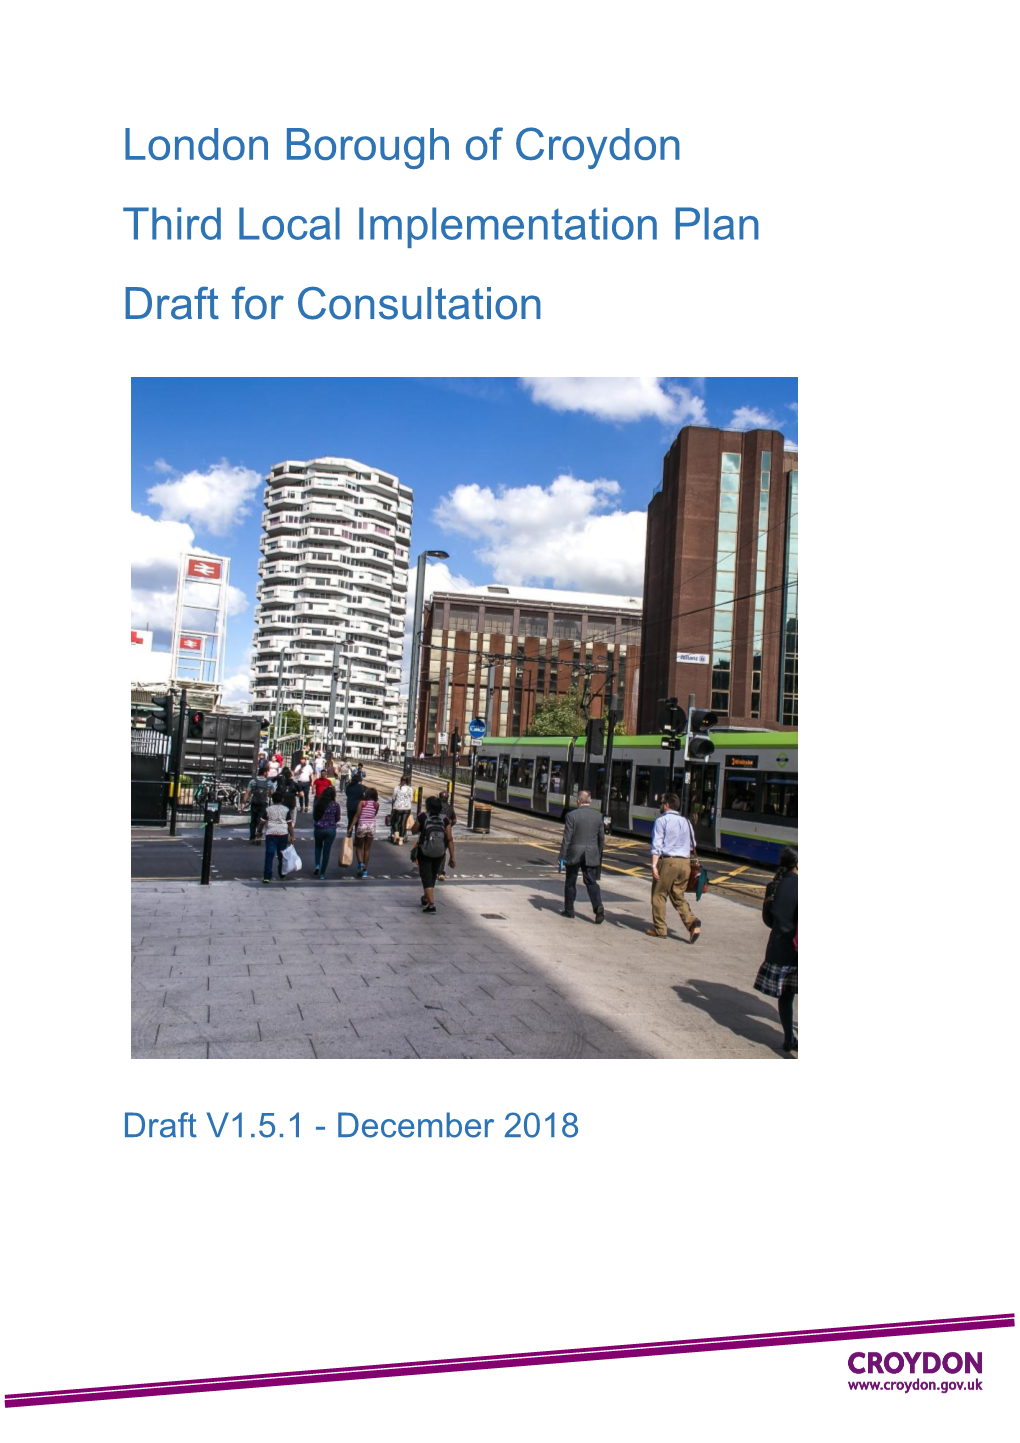 London Borough of Croydon Third Local Implementation Plan Draft for Consultation